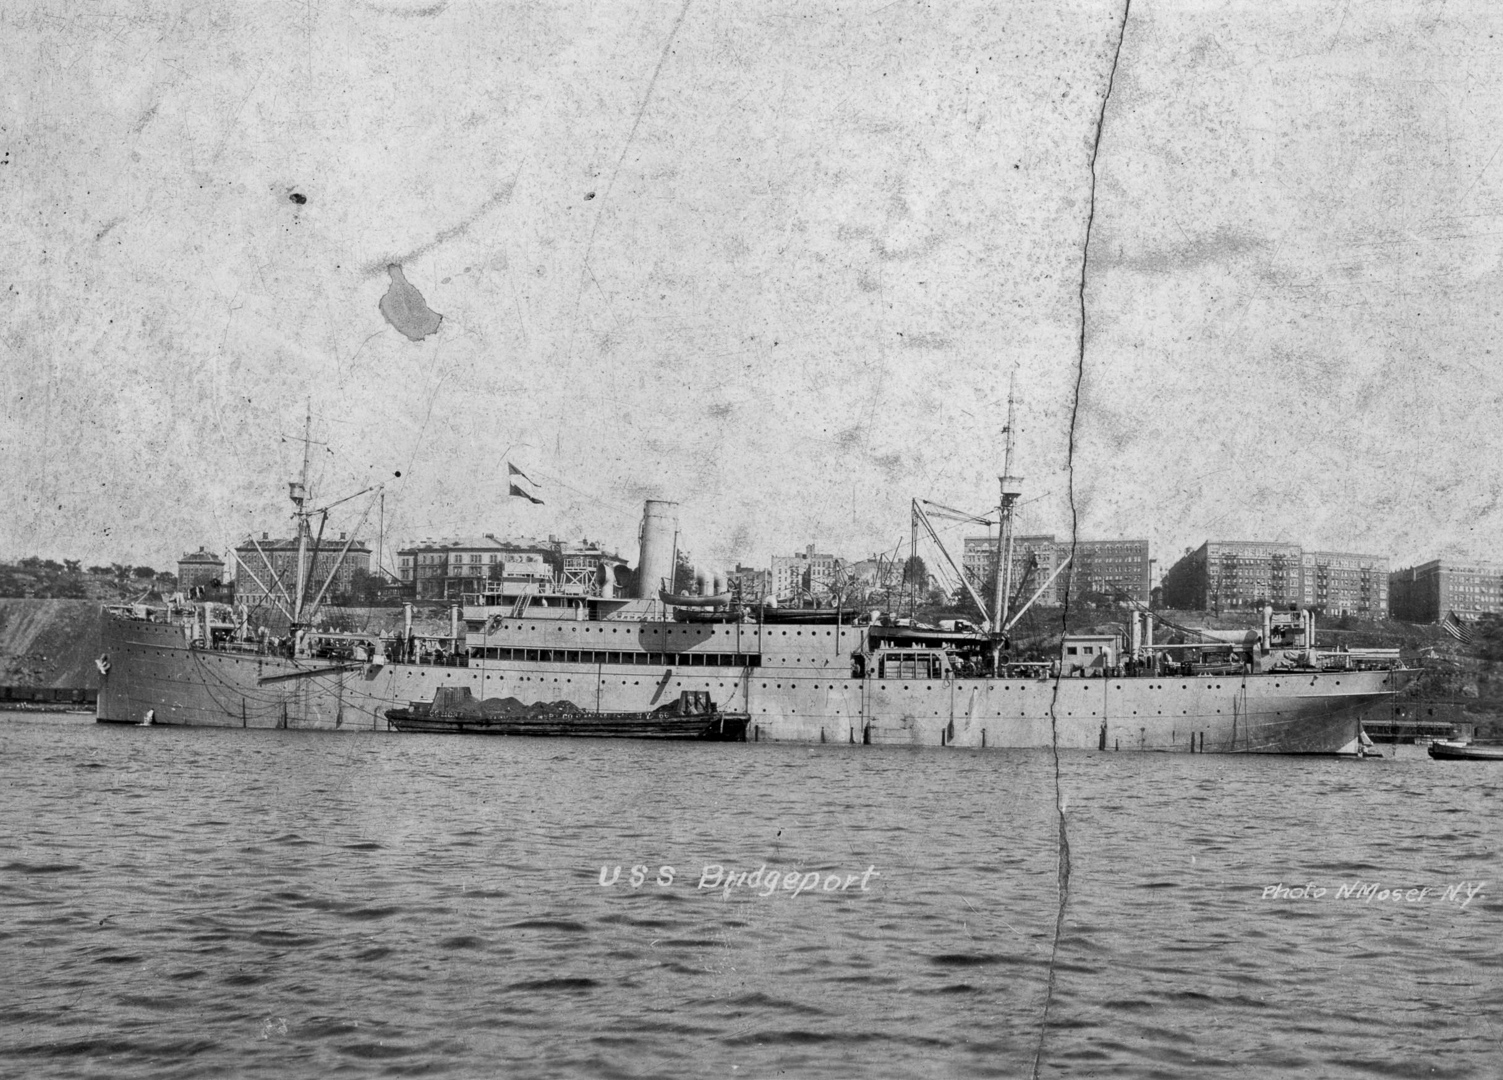 USS Bridgeport (probable transport ship during Spanish American War)